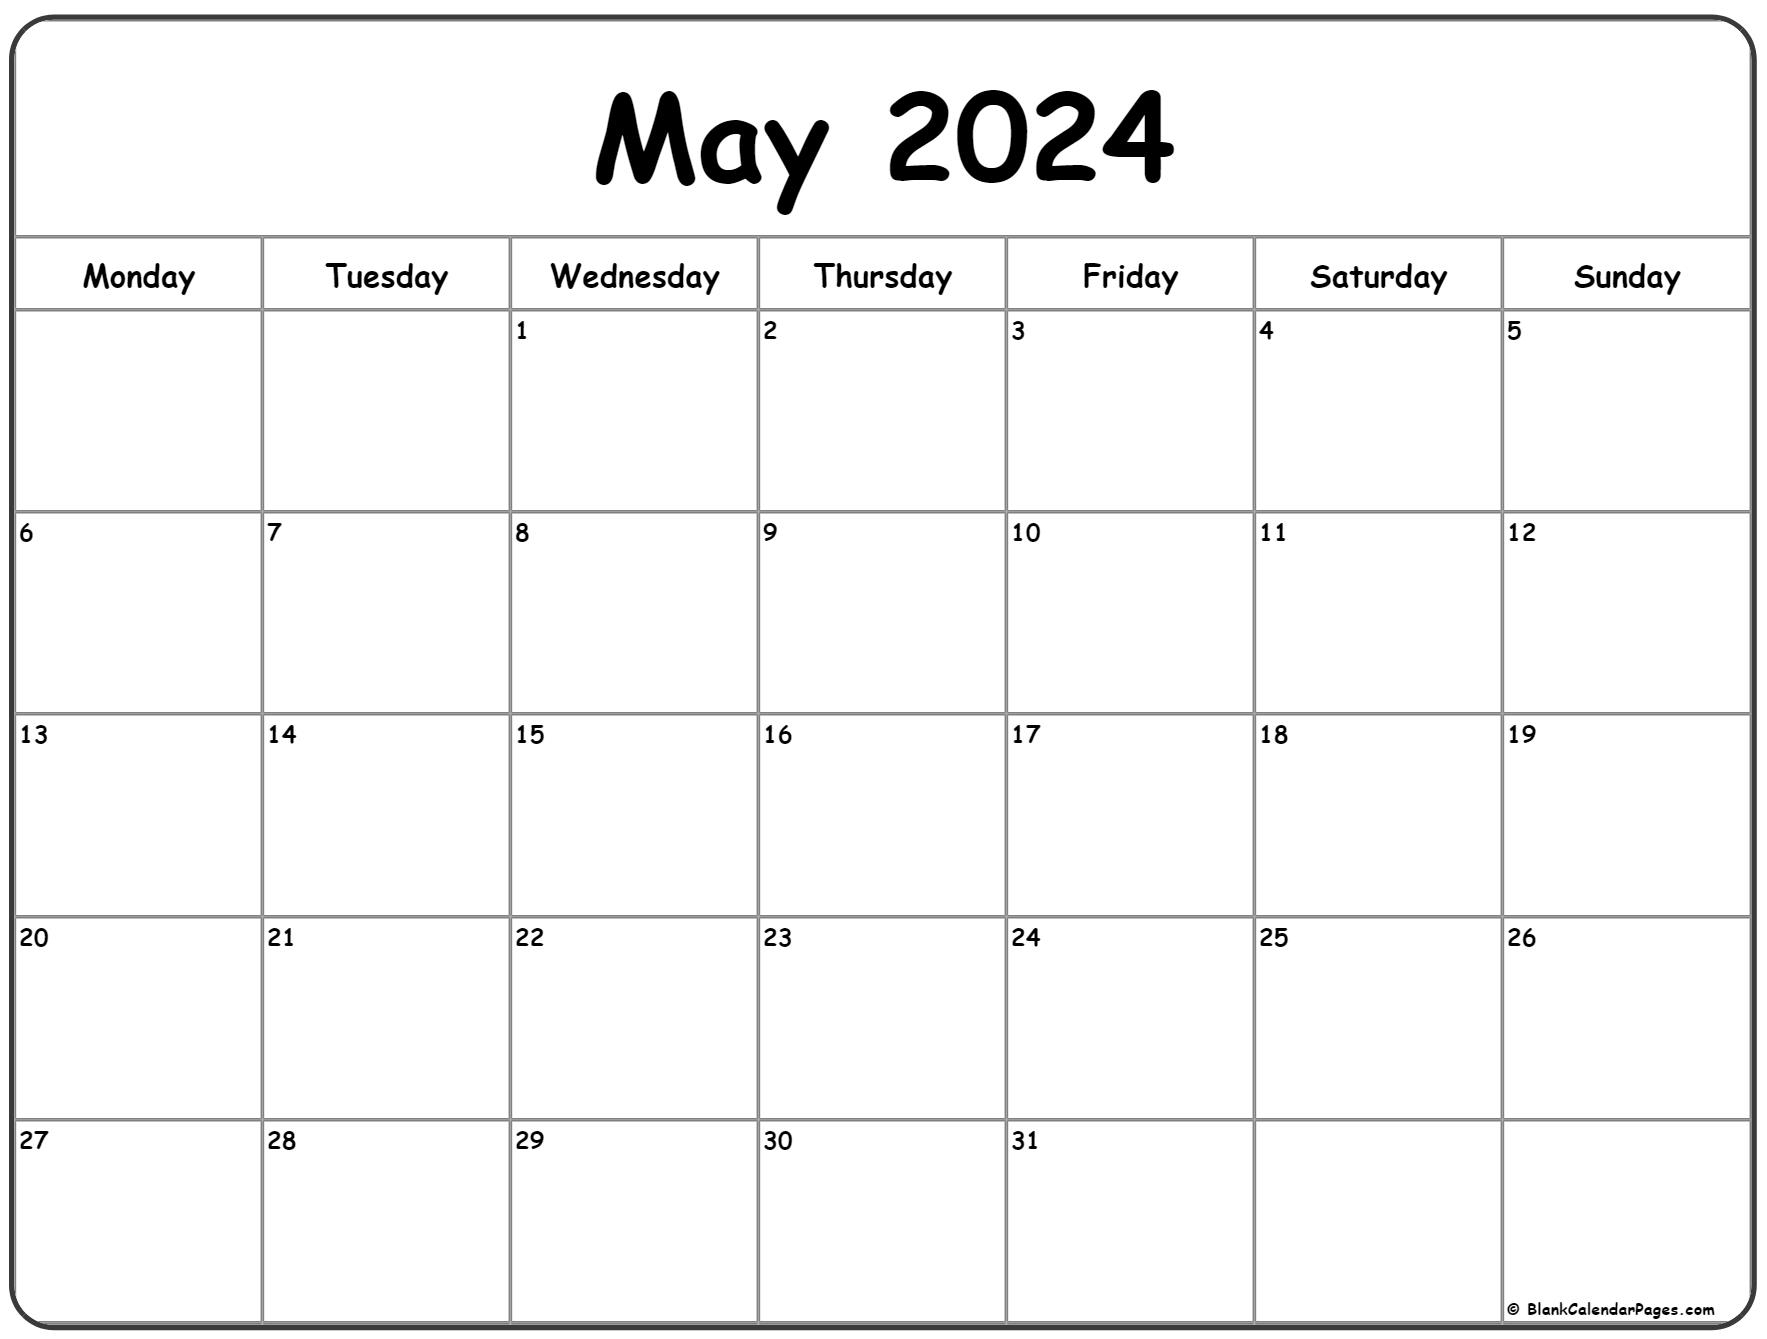 May 2024 Monday Calendar | Monday To Sunday for 2024 Calendar Printable May